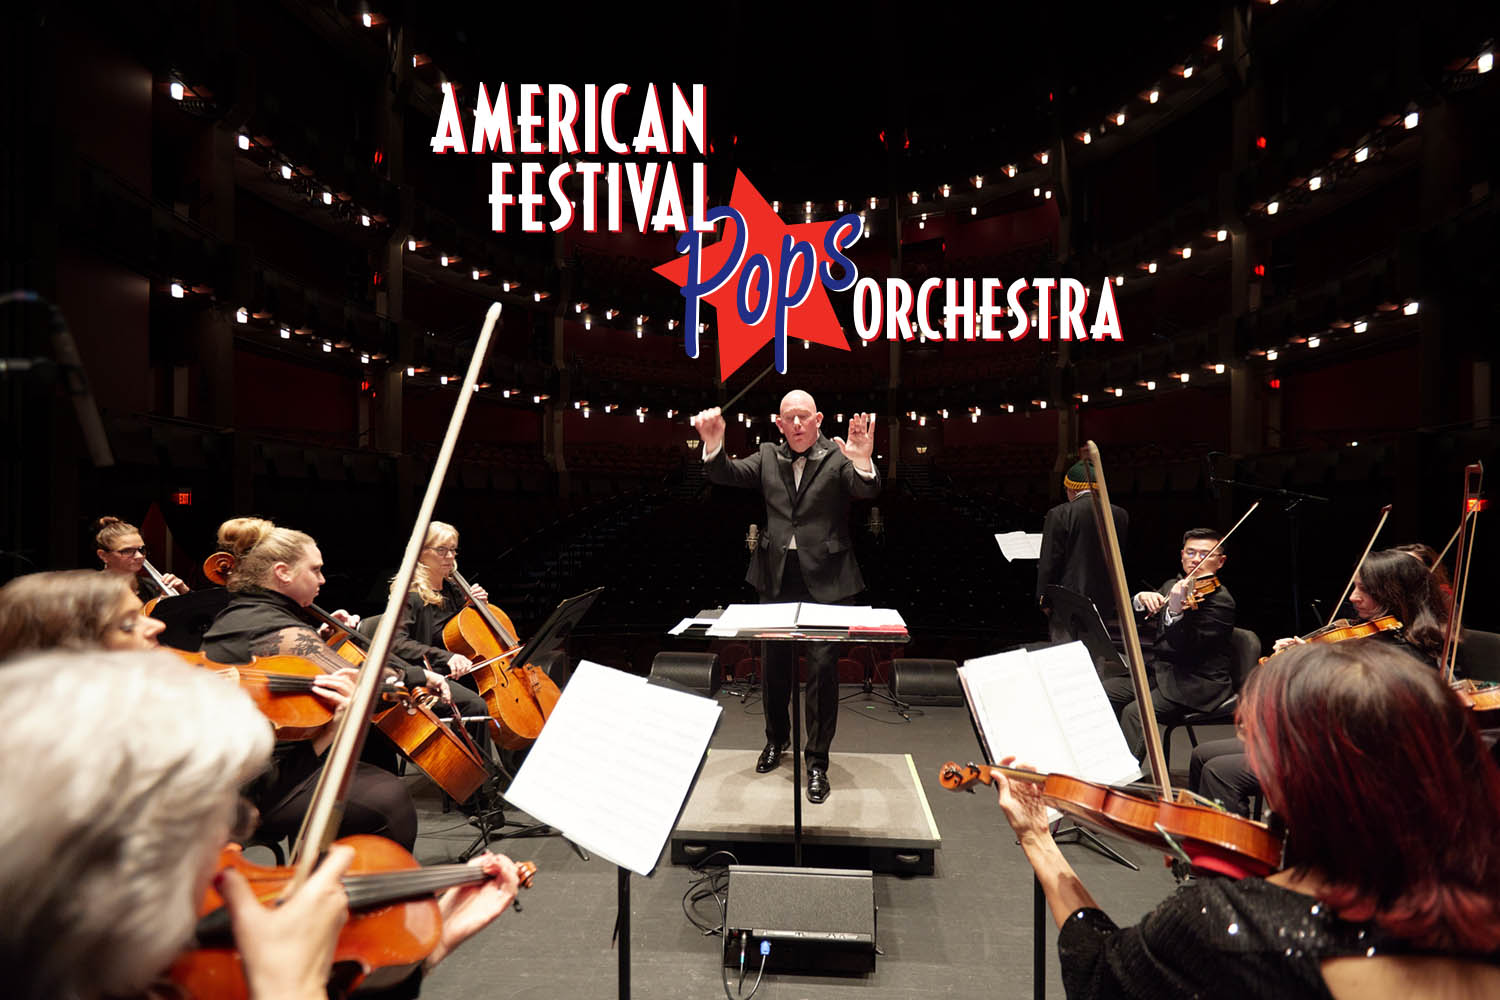 American Festival Pops Orchestra